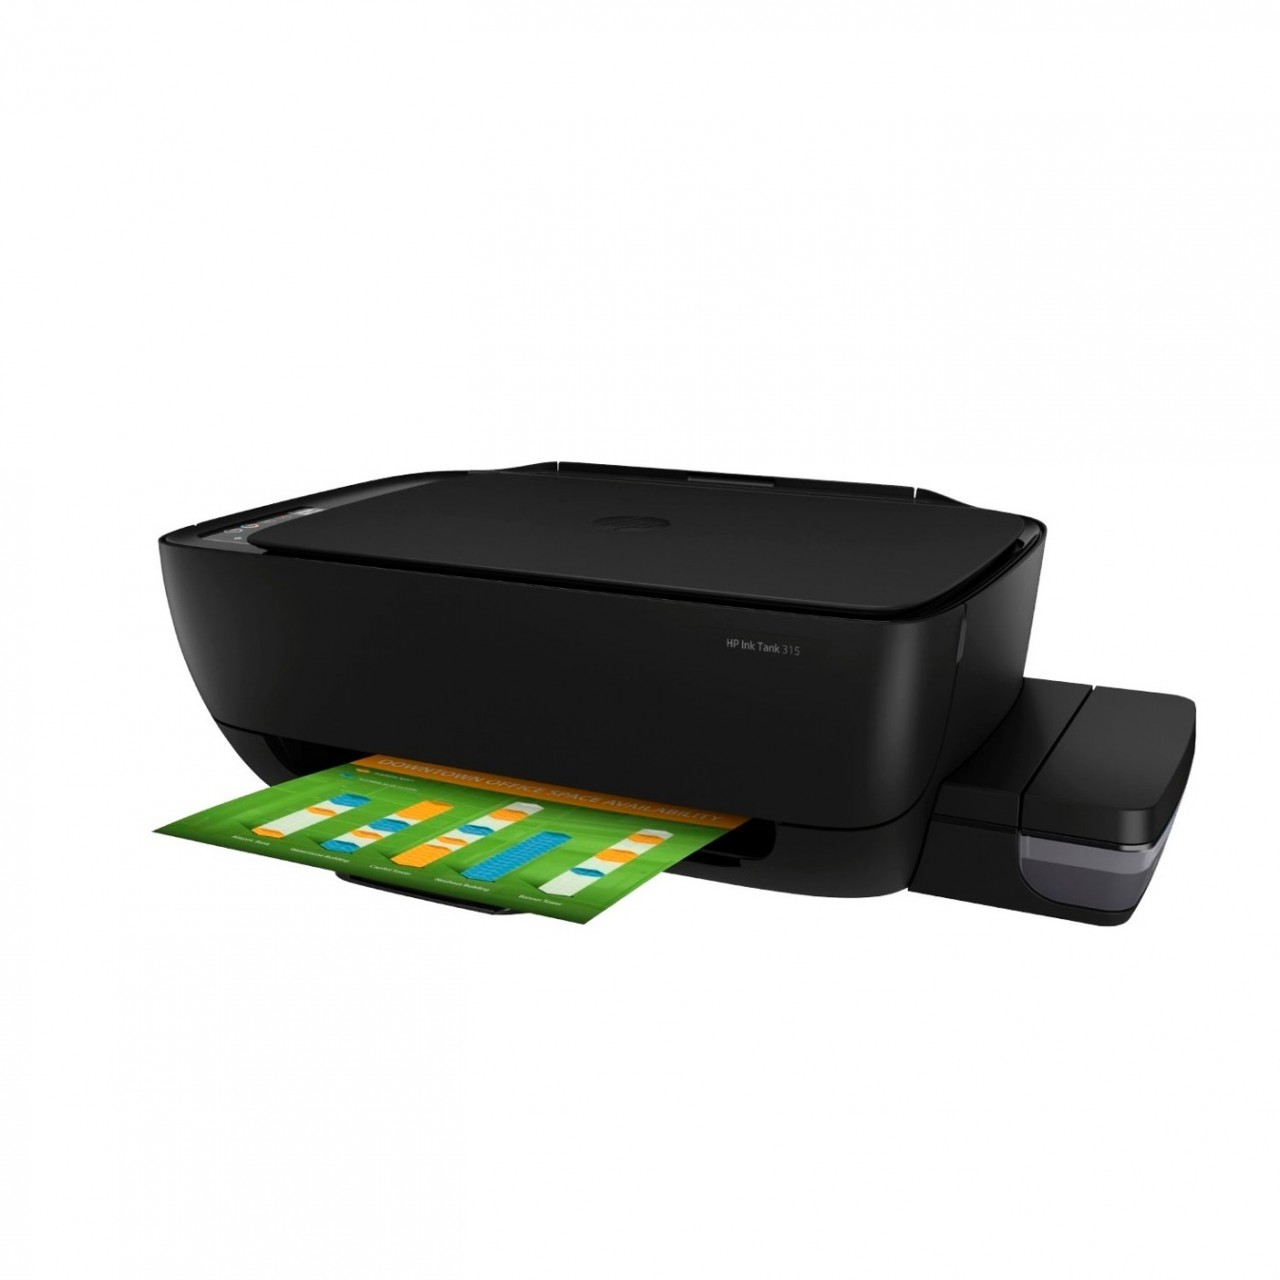 HP Printer Ink Tank 315 - Printer/Scanner/Copier – 360 MHz Processor